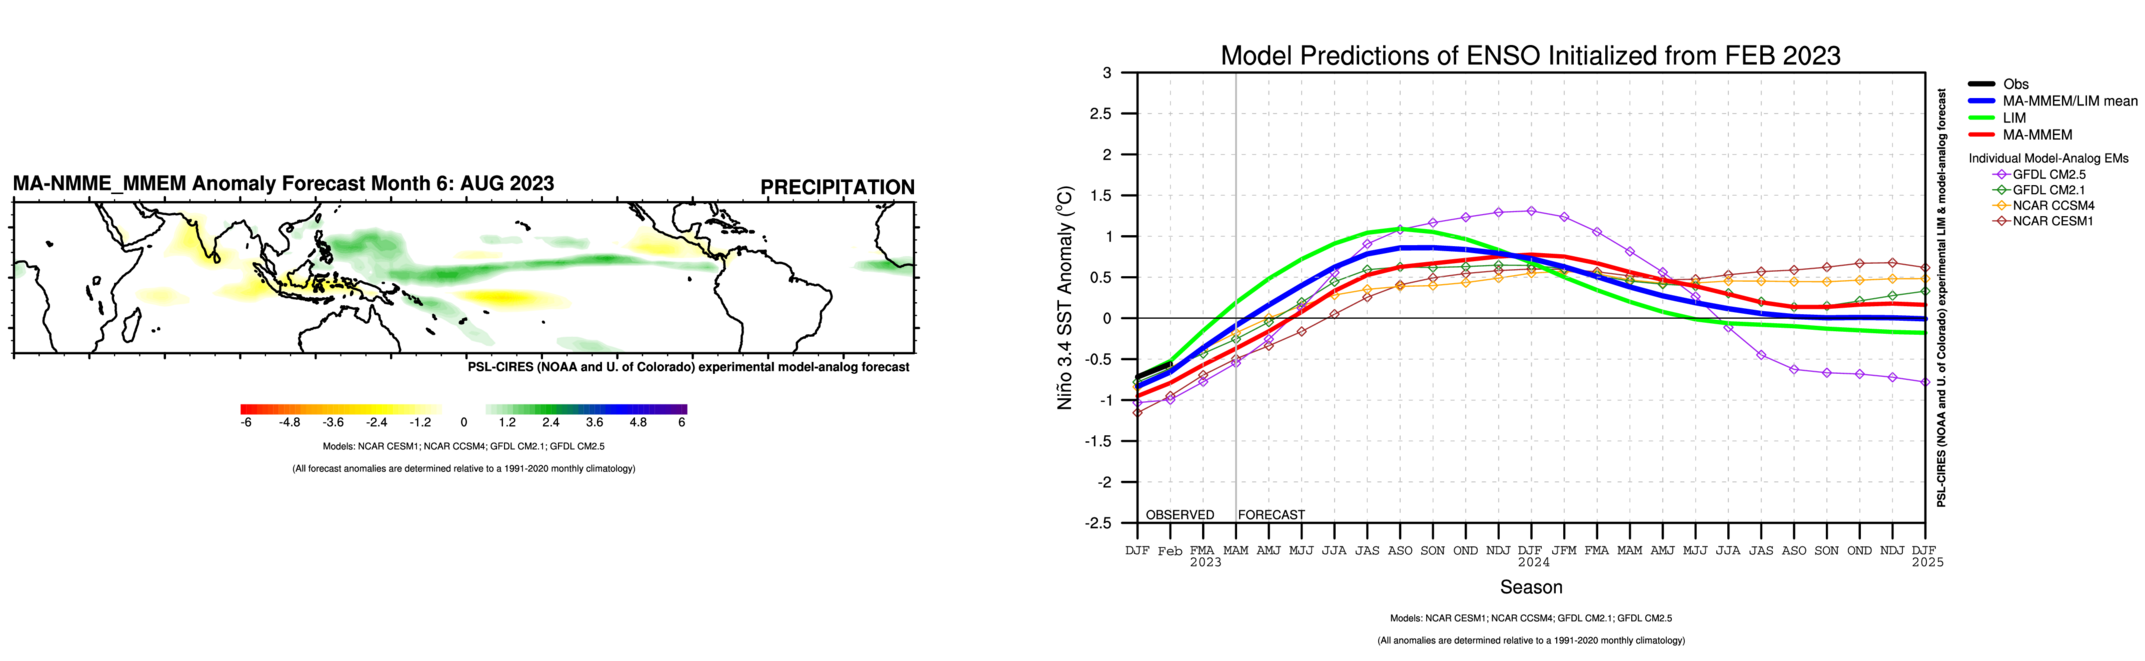 Sample MA and LIM Nino 34 forecasts